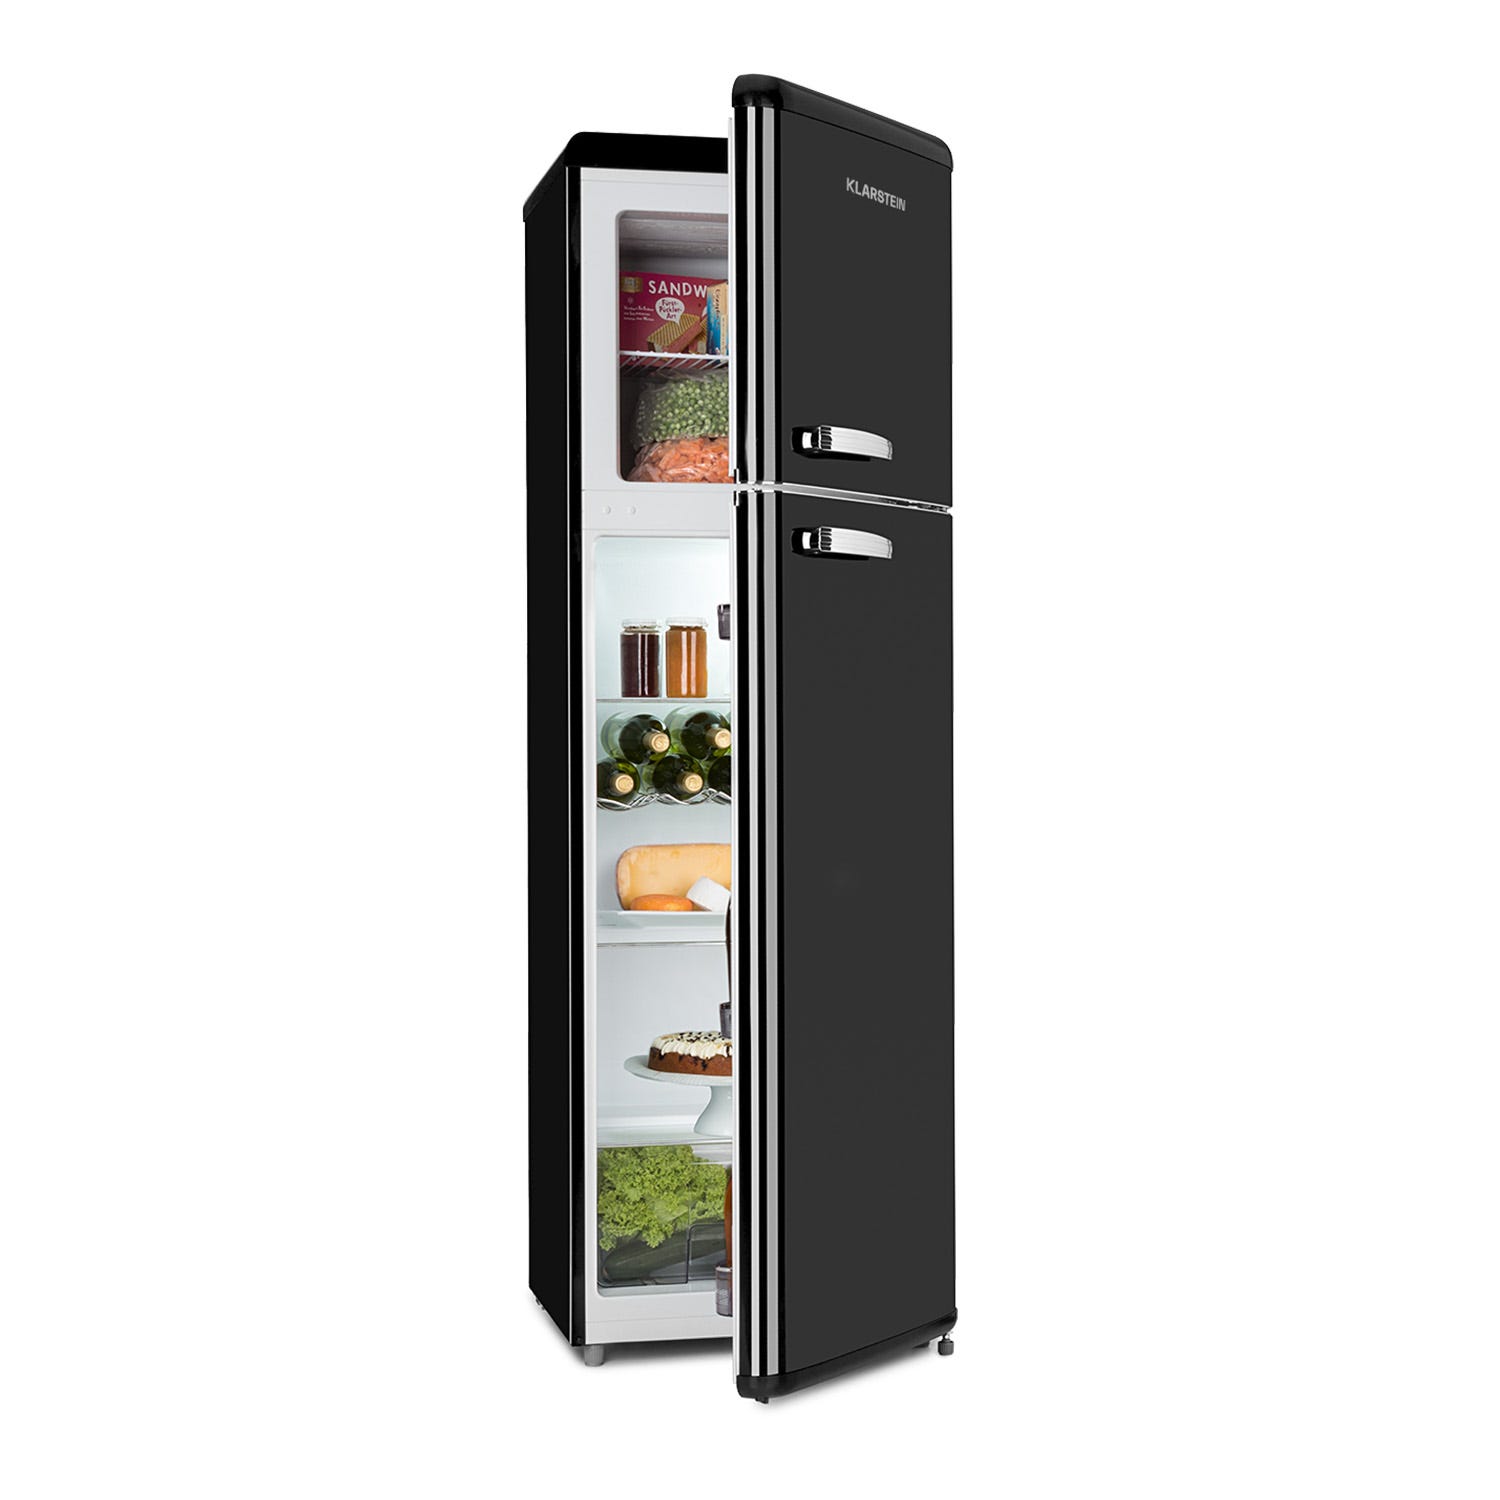 Refrigerateur congélateur - Klarstein Audrey Retro - 194 / 56 litres - Look  retro noir